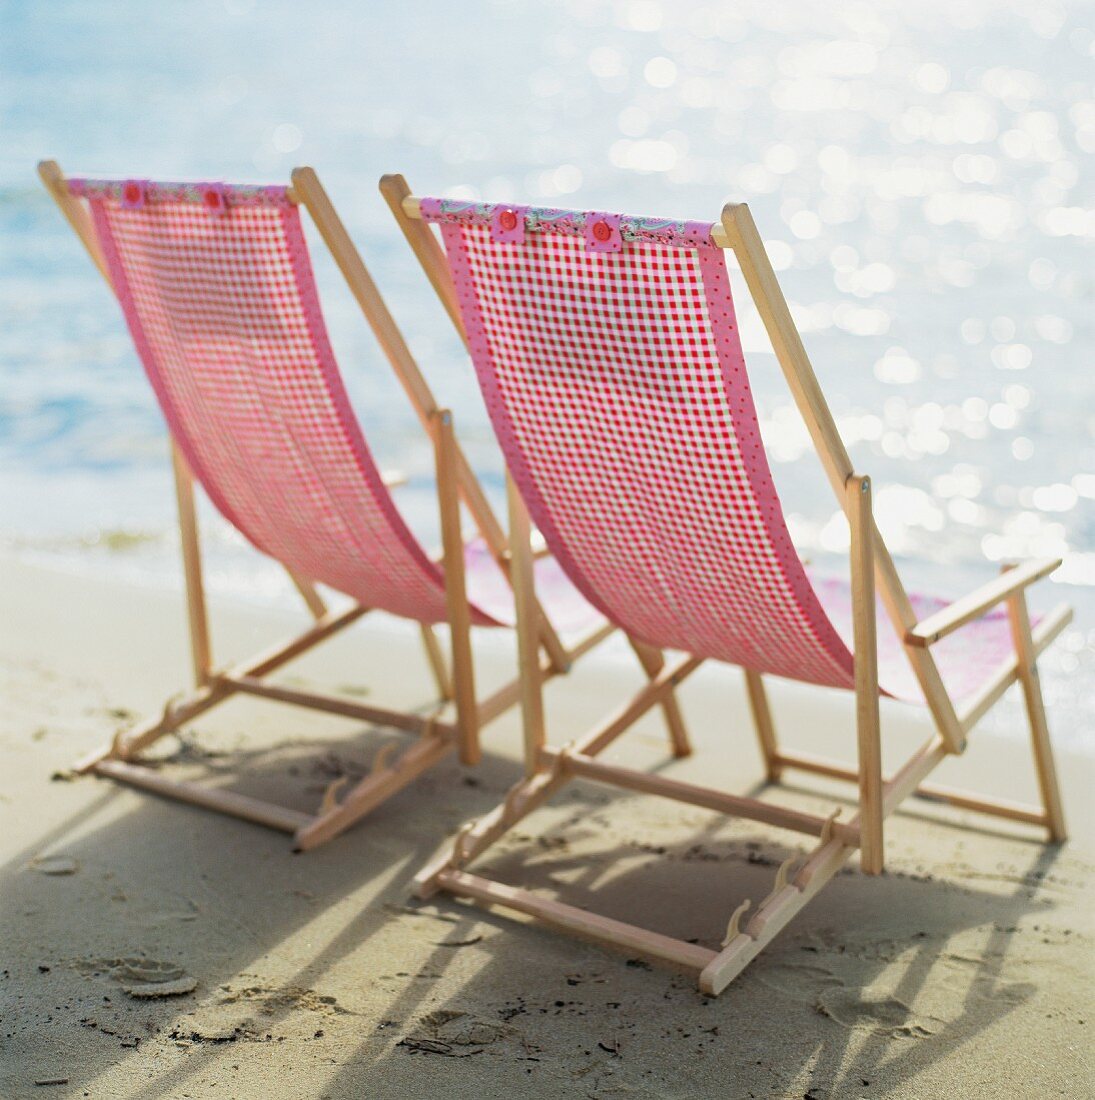 Two sun chairs on a sandy beach.